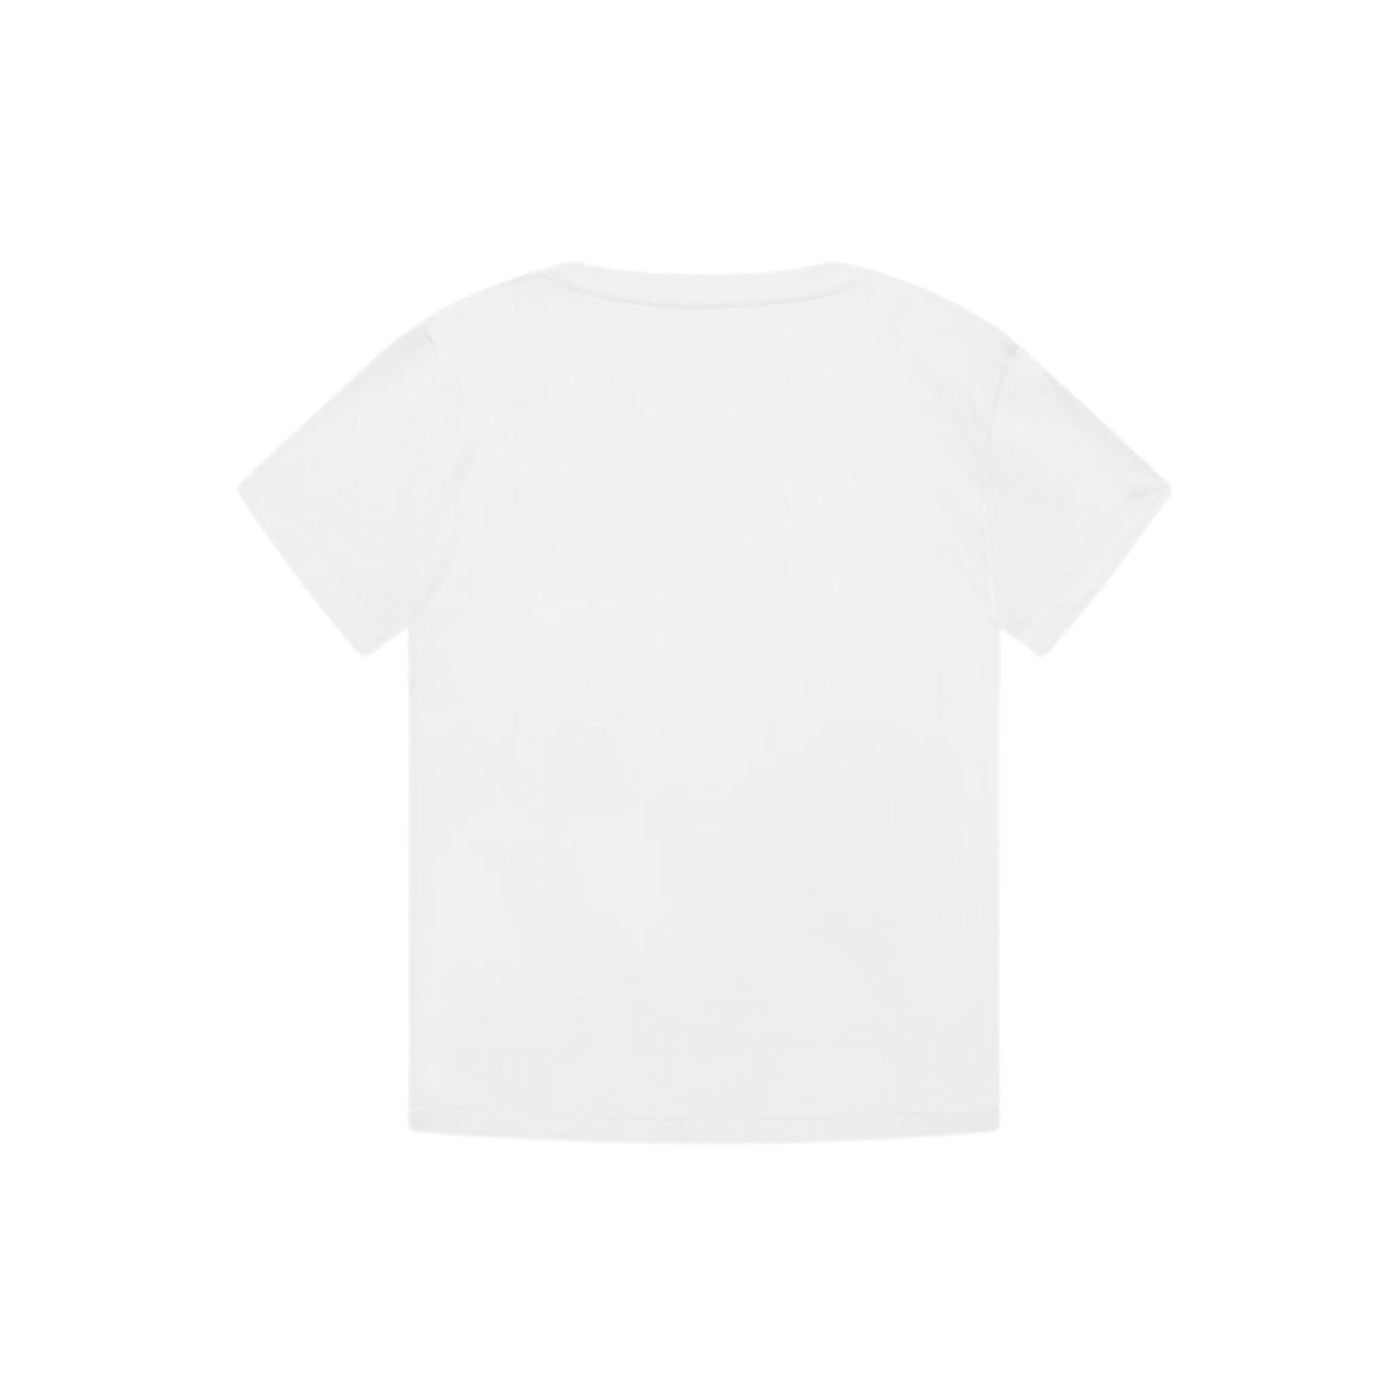 T-shirt Bambina Bianco in cotone con scollatura girocollo